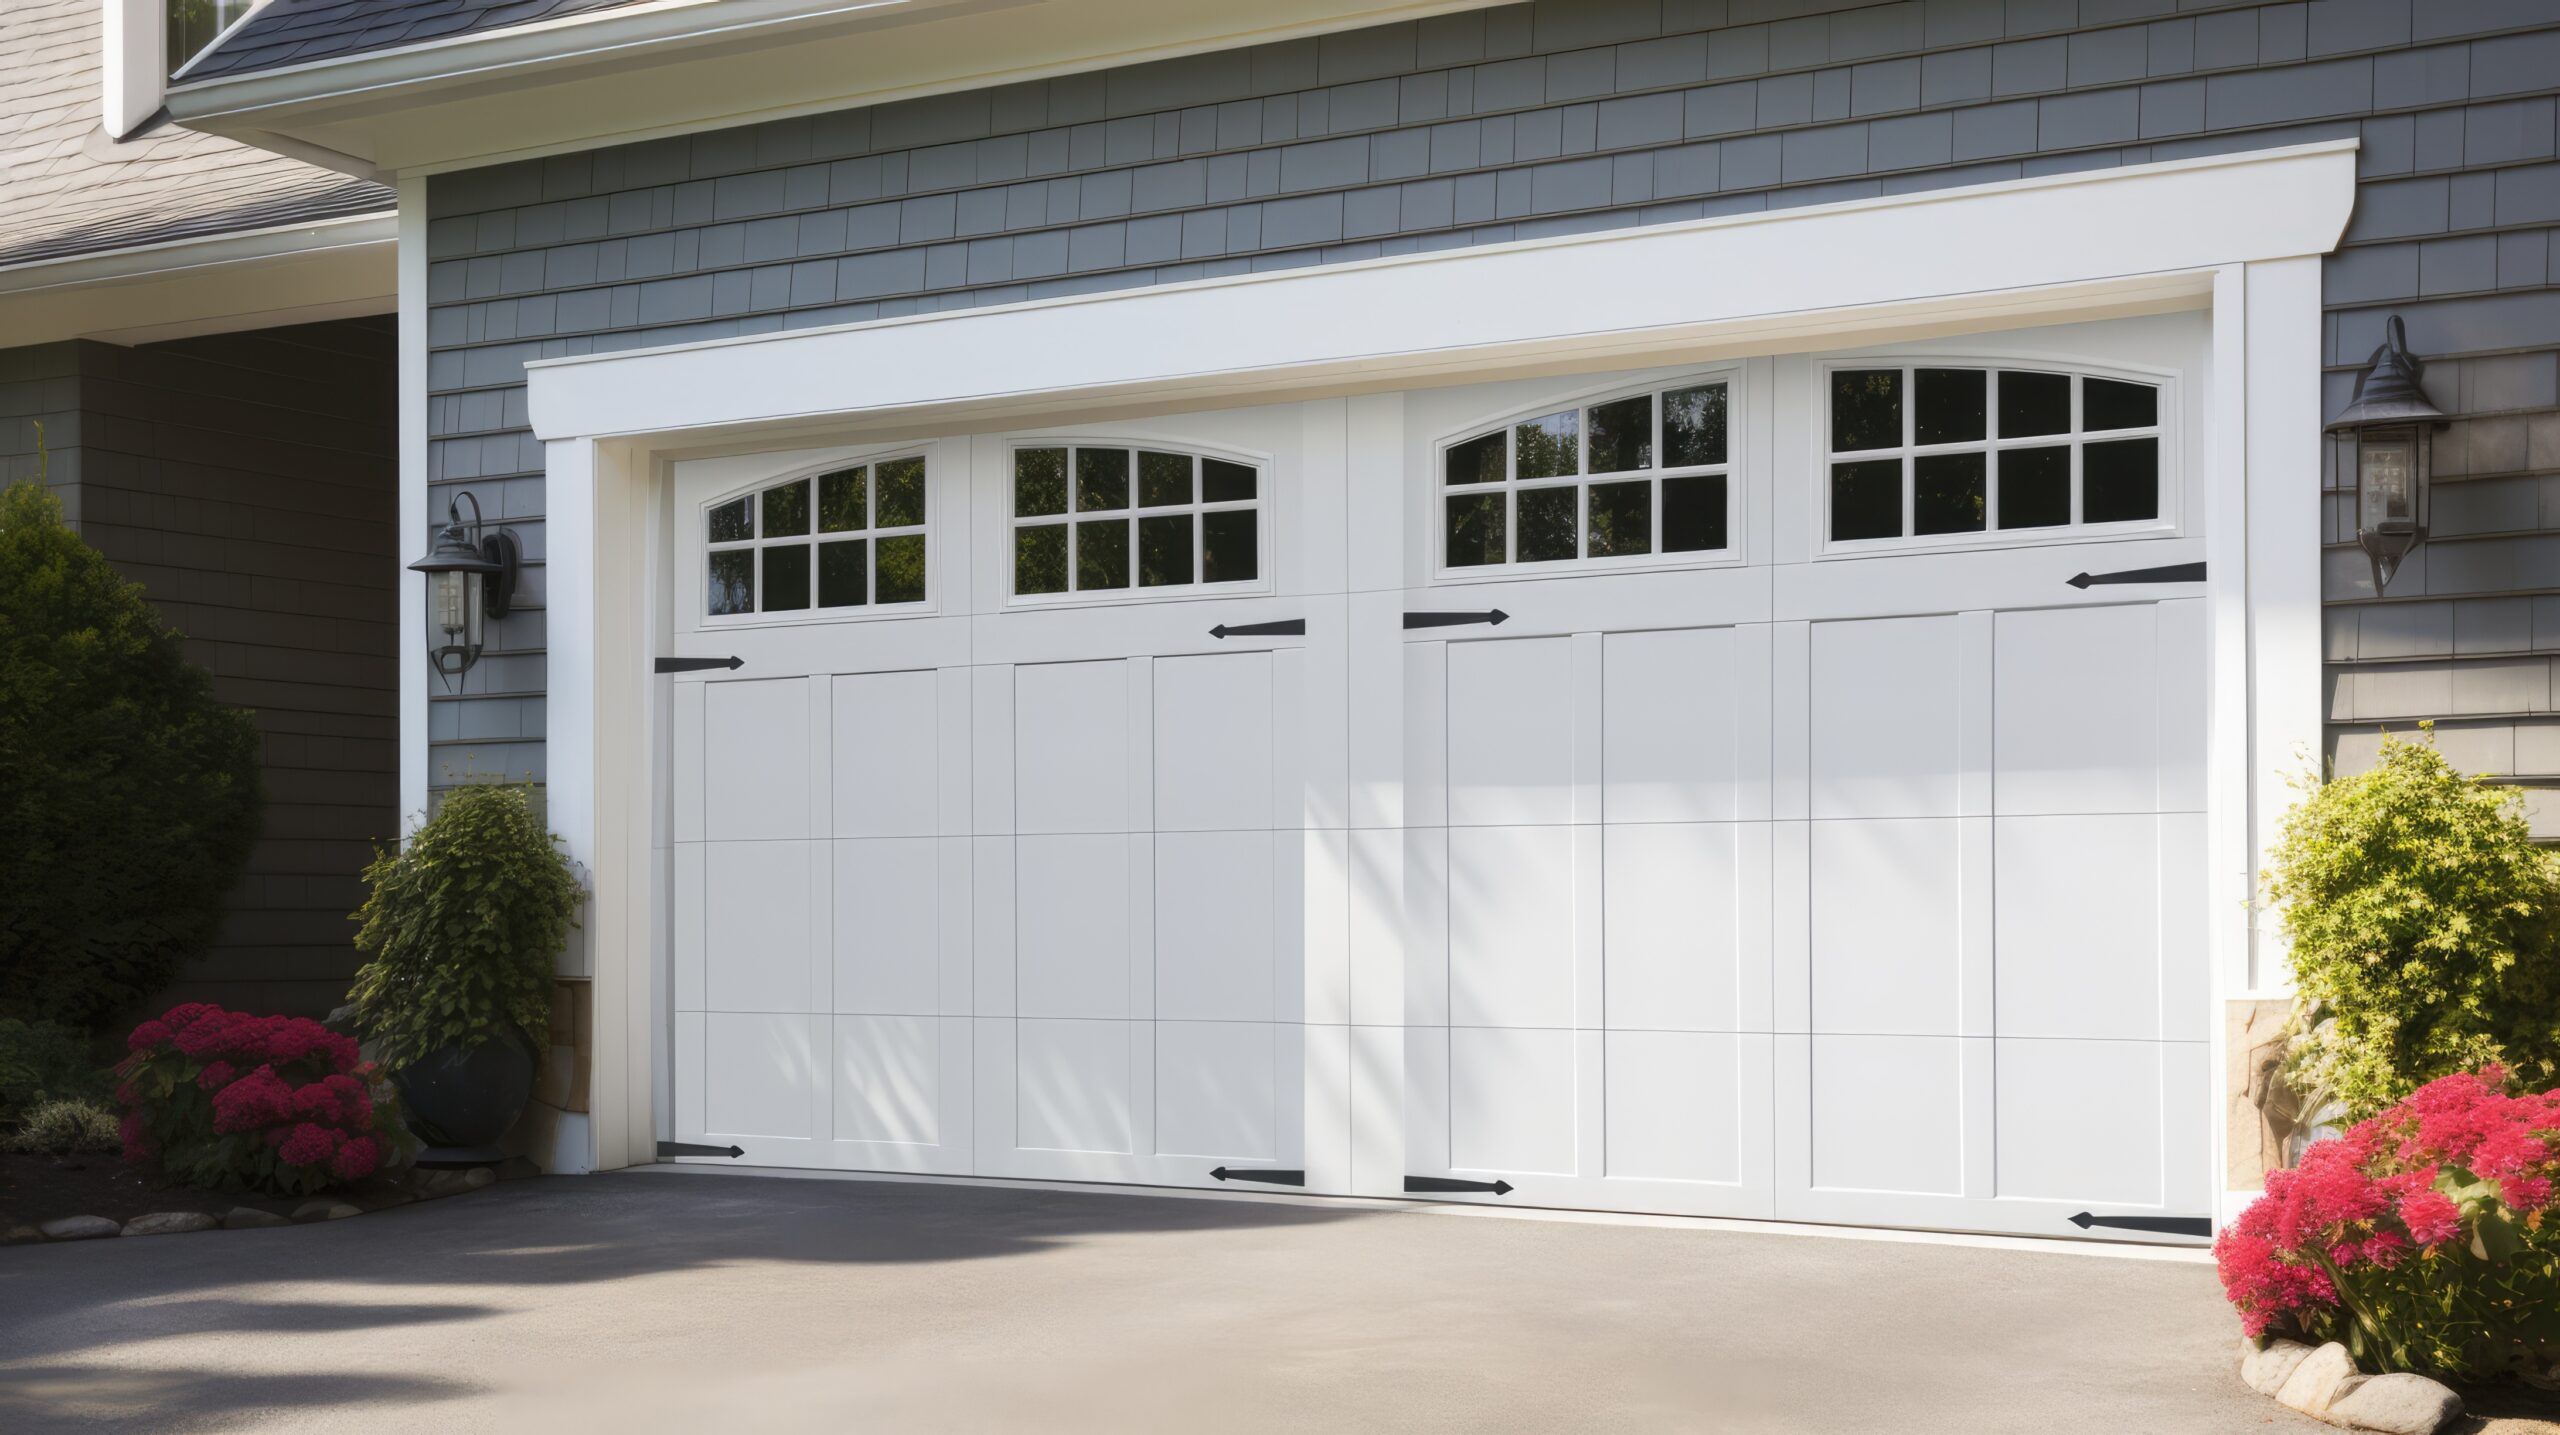 Affordable Garage Door Fix is proud to provide garage door repair in Holladay, UT. Contact us at (385) 207-2218 for a quote."